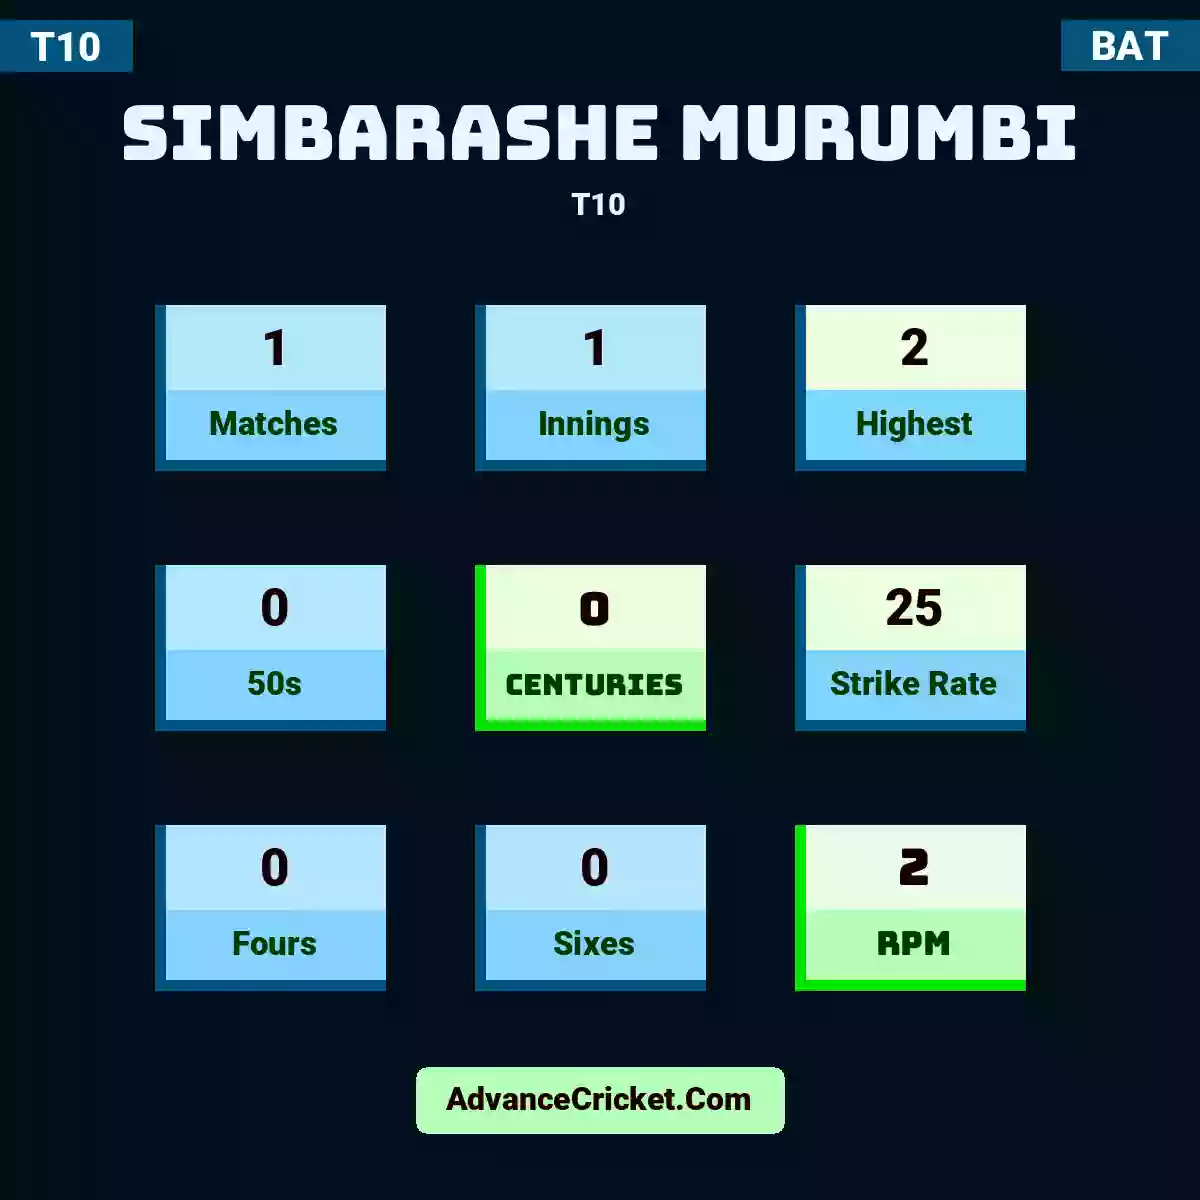 Simbarashe Murumbi T10 , Simbarashe Murumbi played 1 matches, scored 2 runs as highest, 0 half-centuries, and 0 centuries, with a strike rate of 25. S.Murumbi hit 0 fours and 0 sixes, with an RPM of 2.